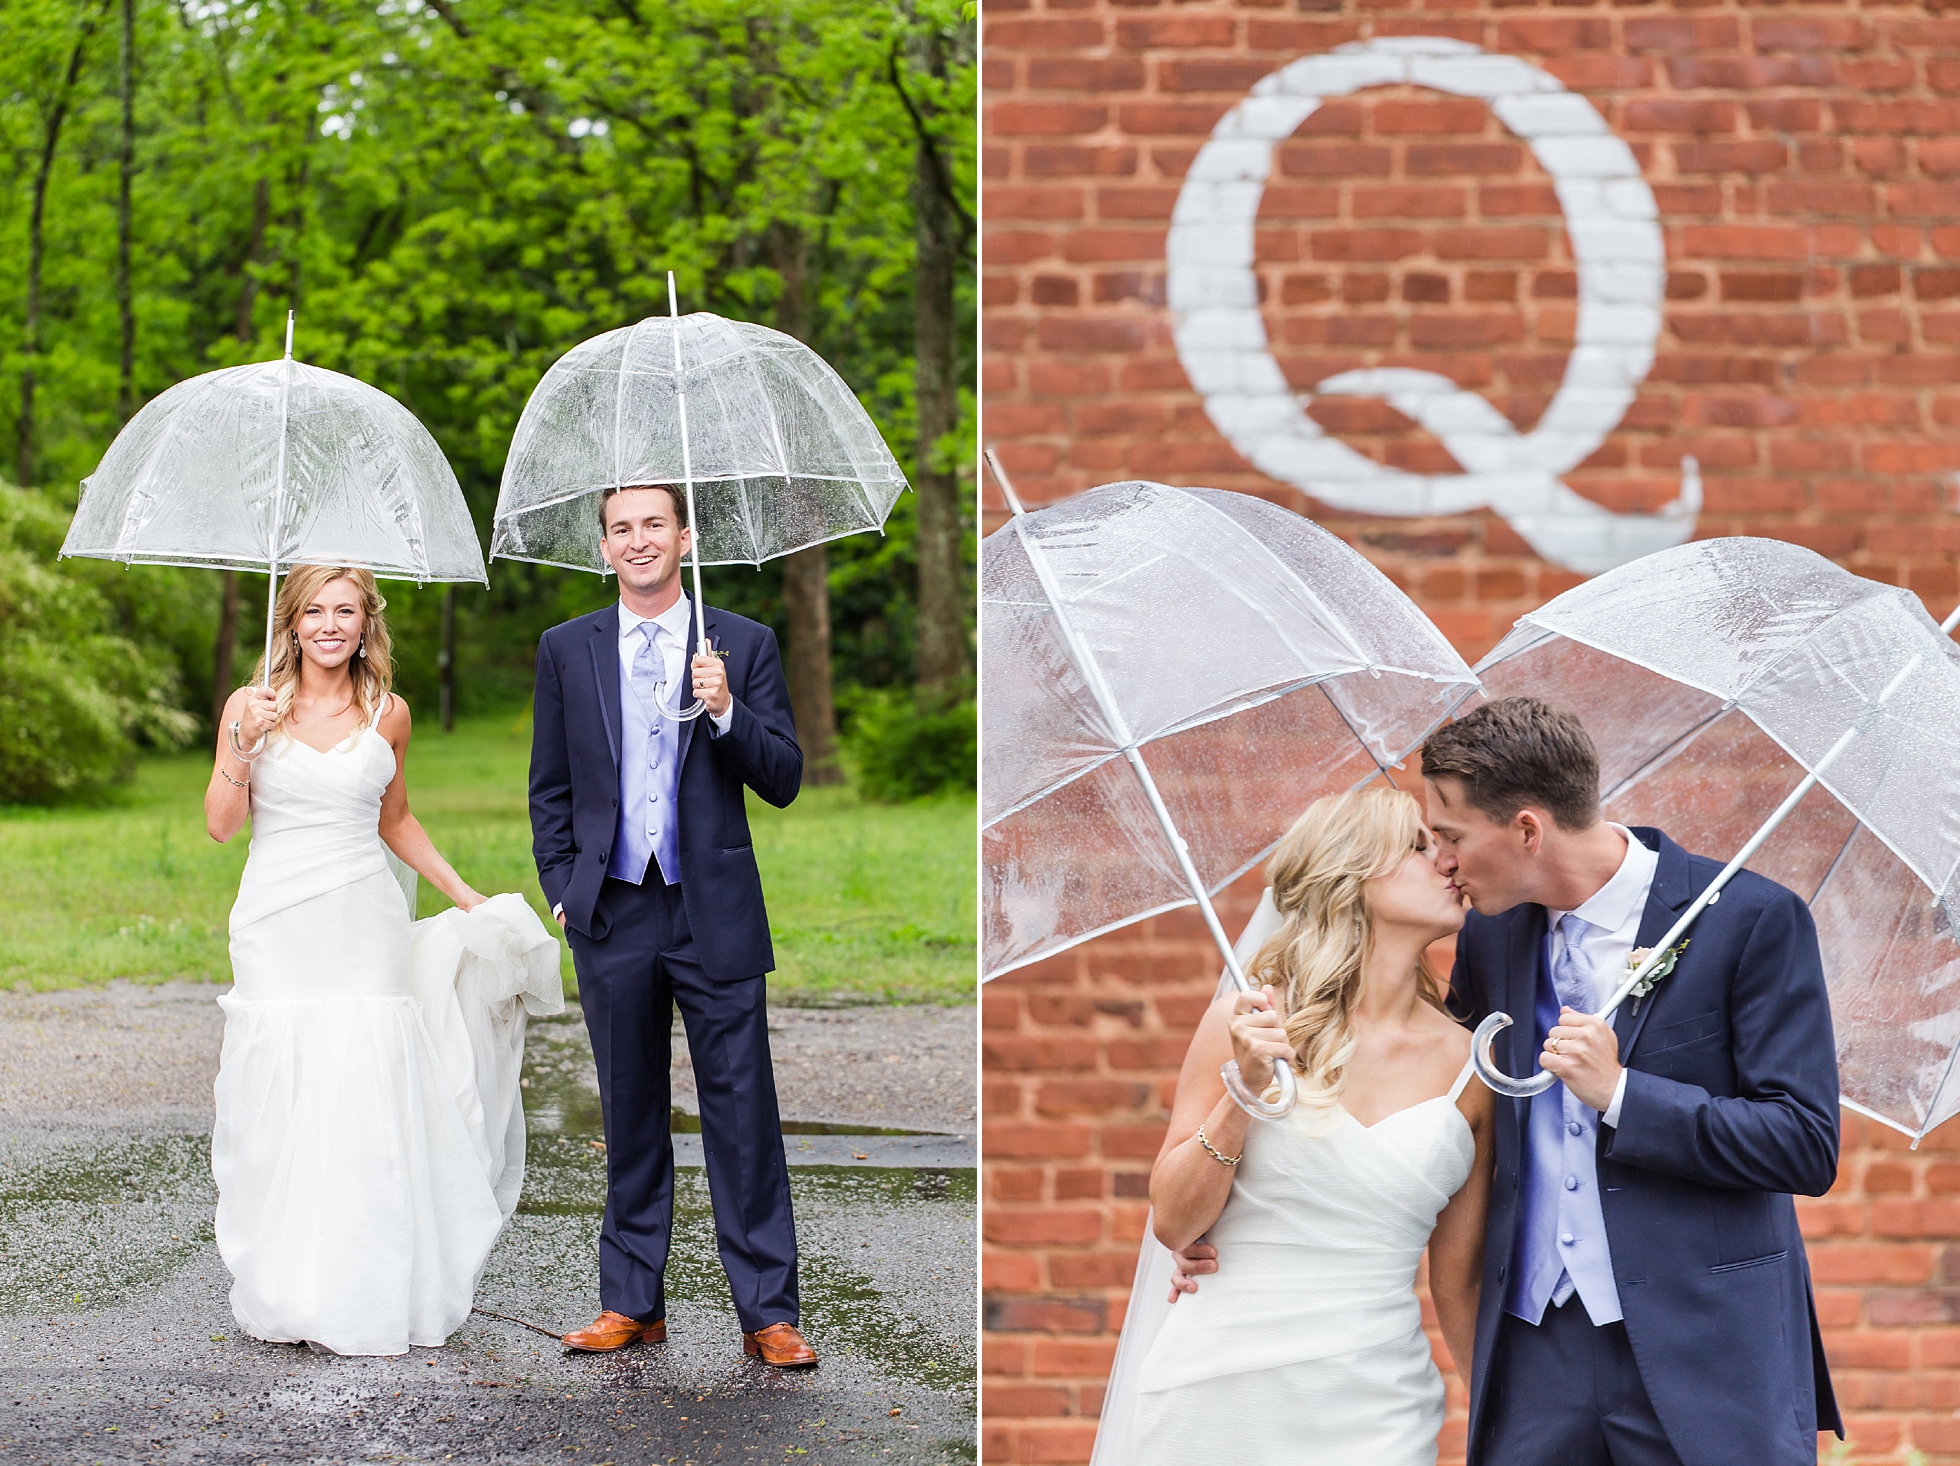 rain rainy wedding day photos umbrella